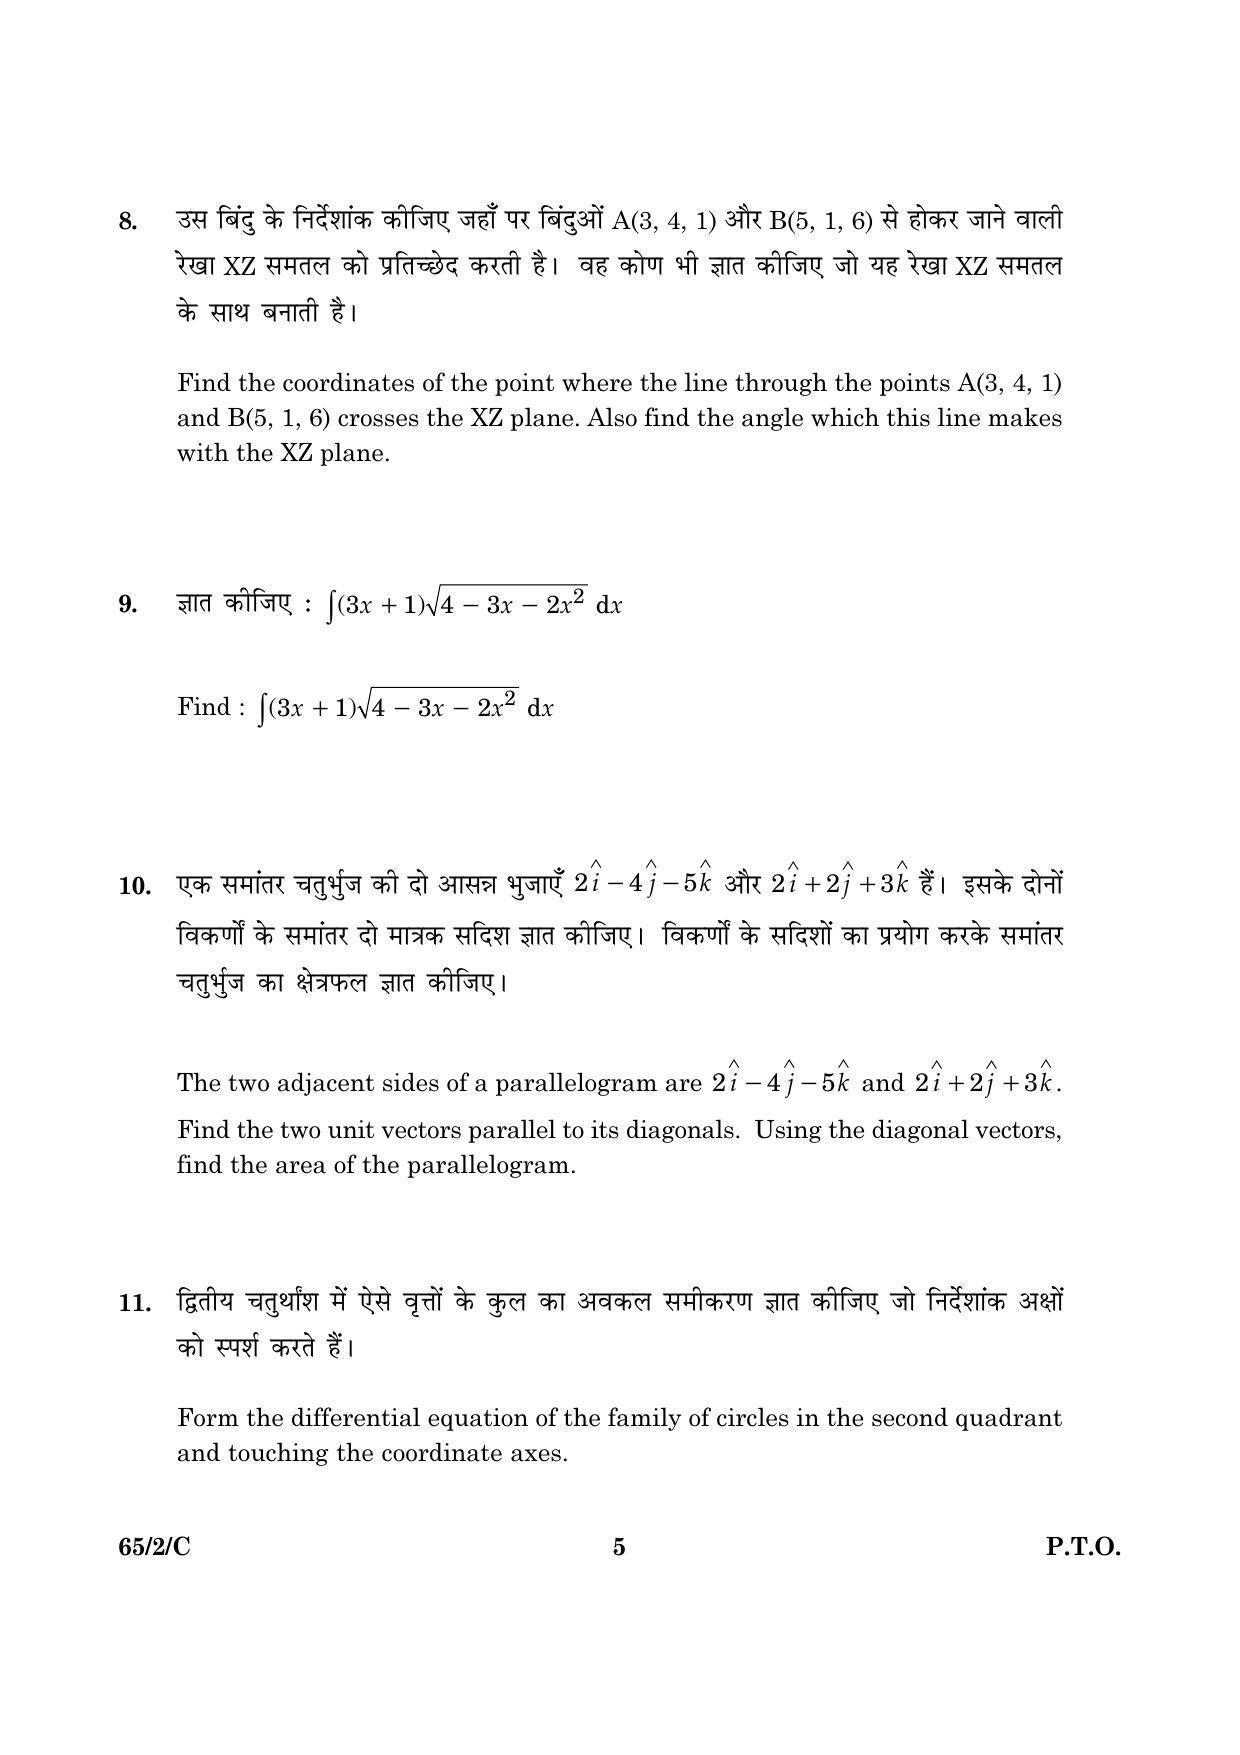 CBSE Class 12 065 Set 2 C Mathematics 2016 Question Paper - Page 5